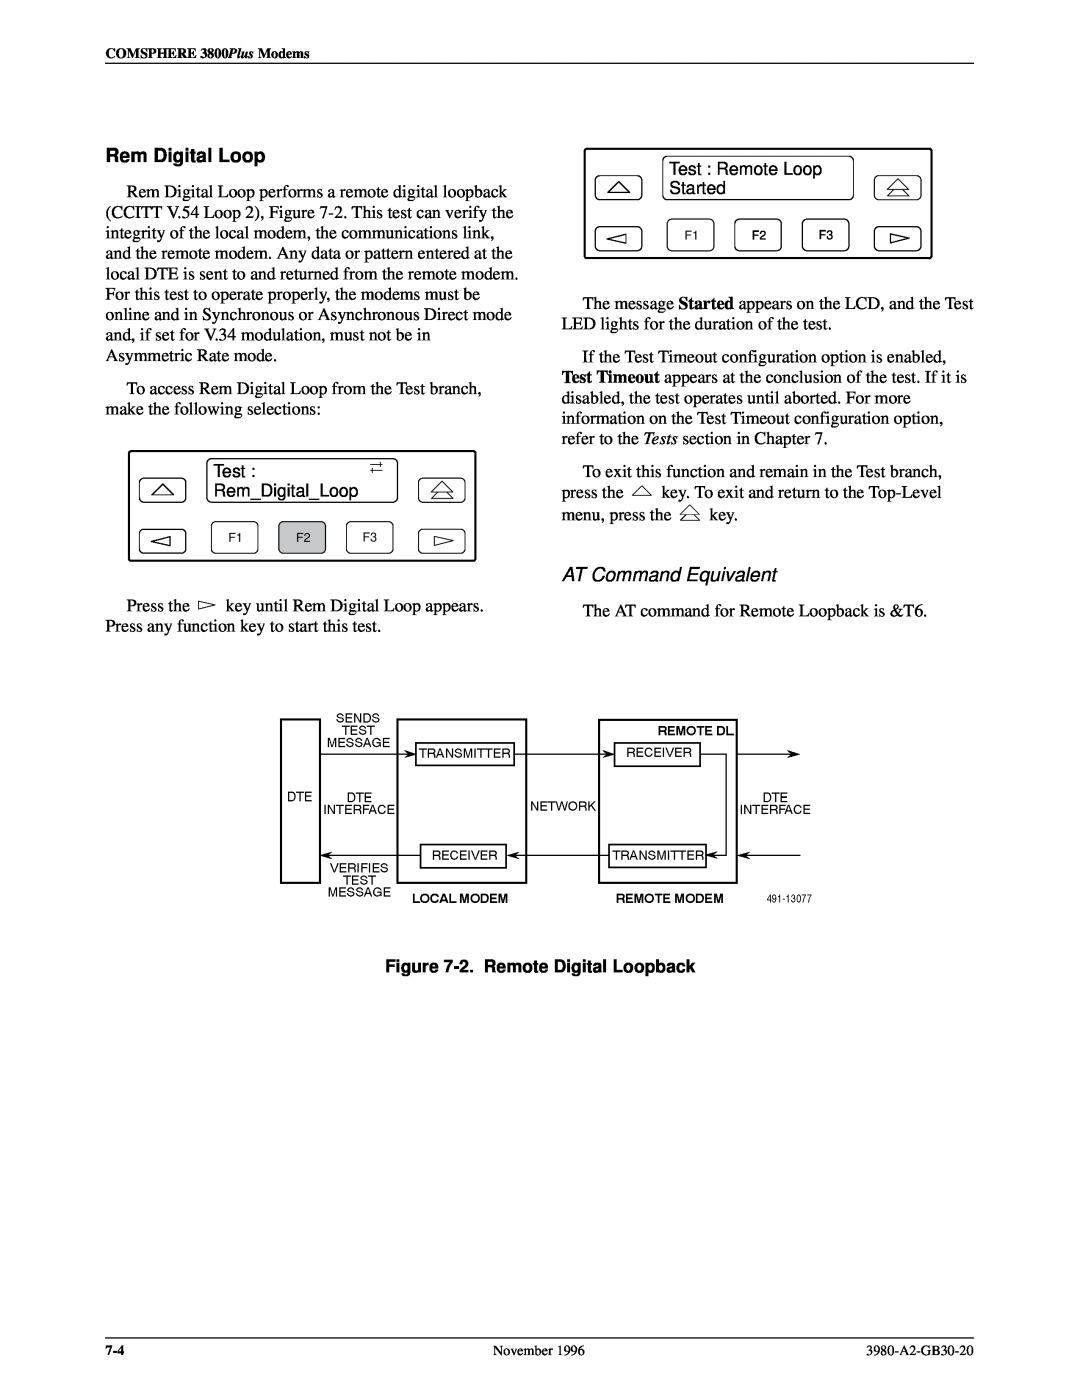 Paradyne 3800PLUS manual Rem Digital Loop, 2. Remote Digital Loopback, AT Command Equivalent 